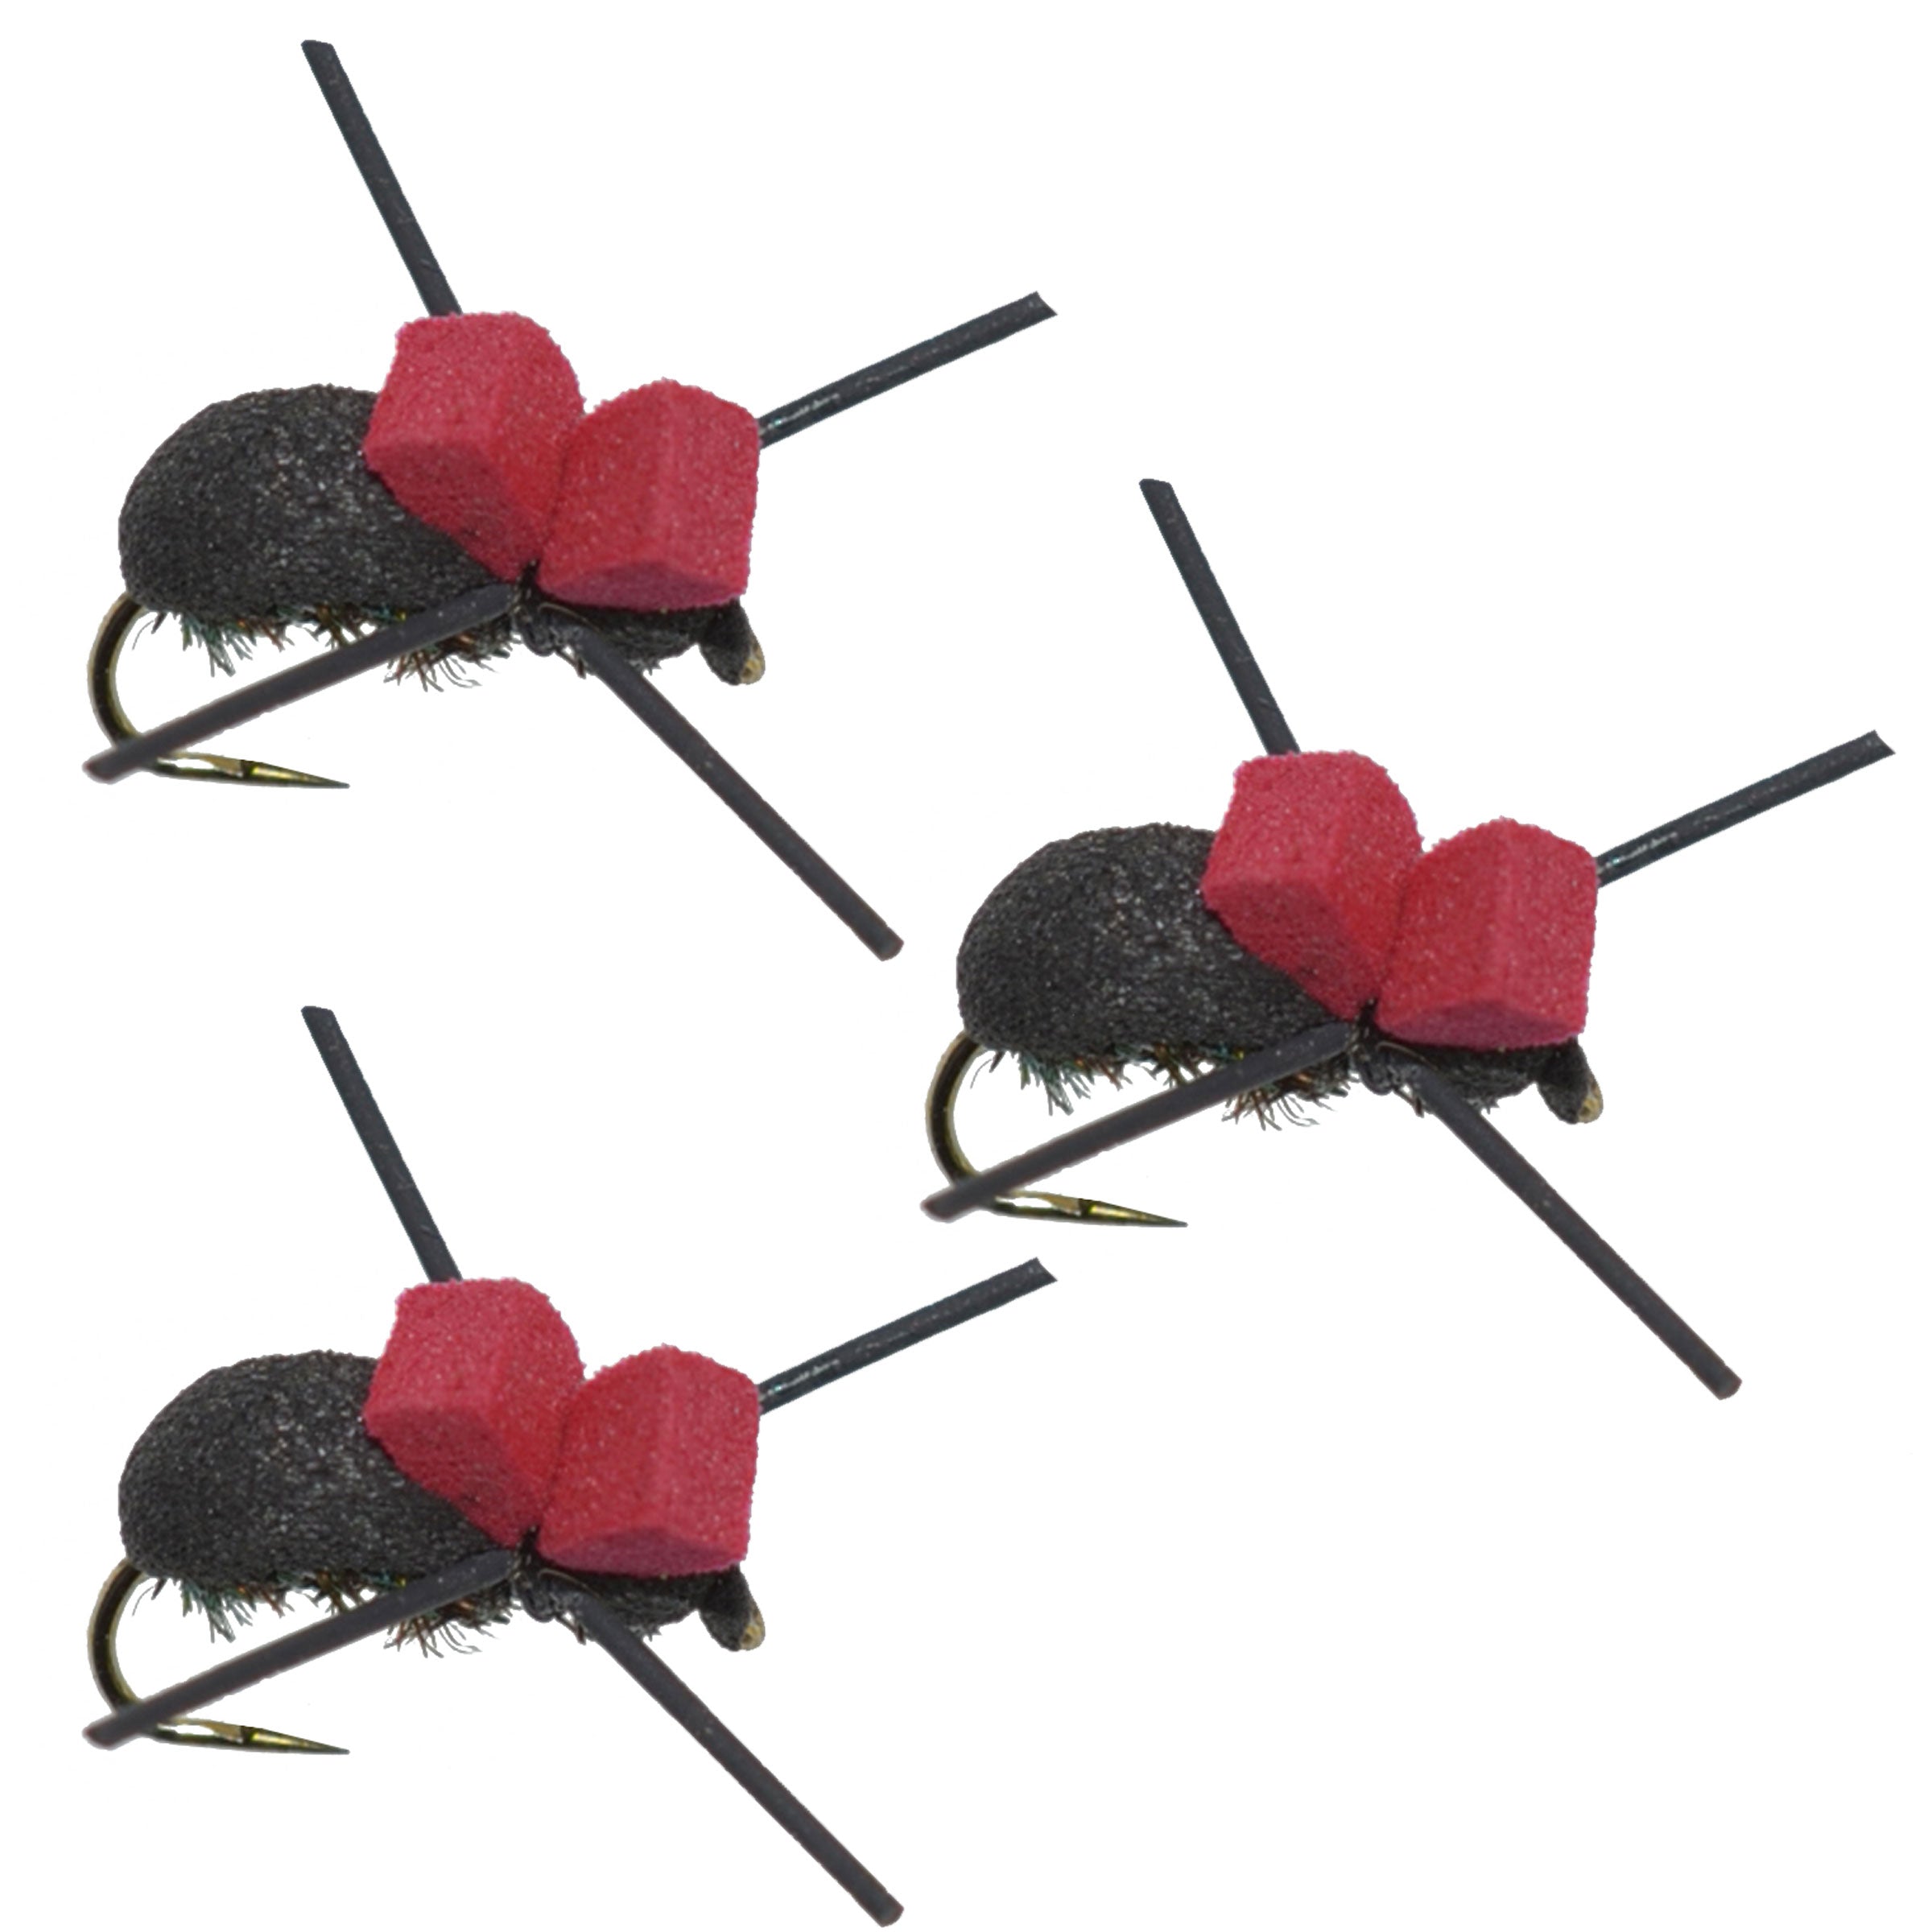 3 Pack Barbless Red Top Black Foam Beetle Terrestrial Trout Dry Fly Fishing Flies - Hook Size 14